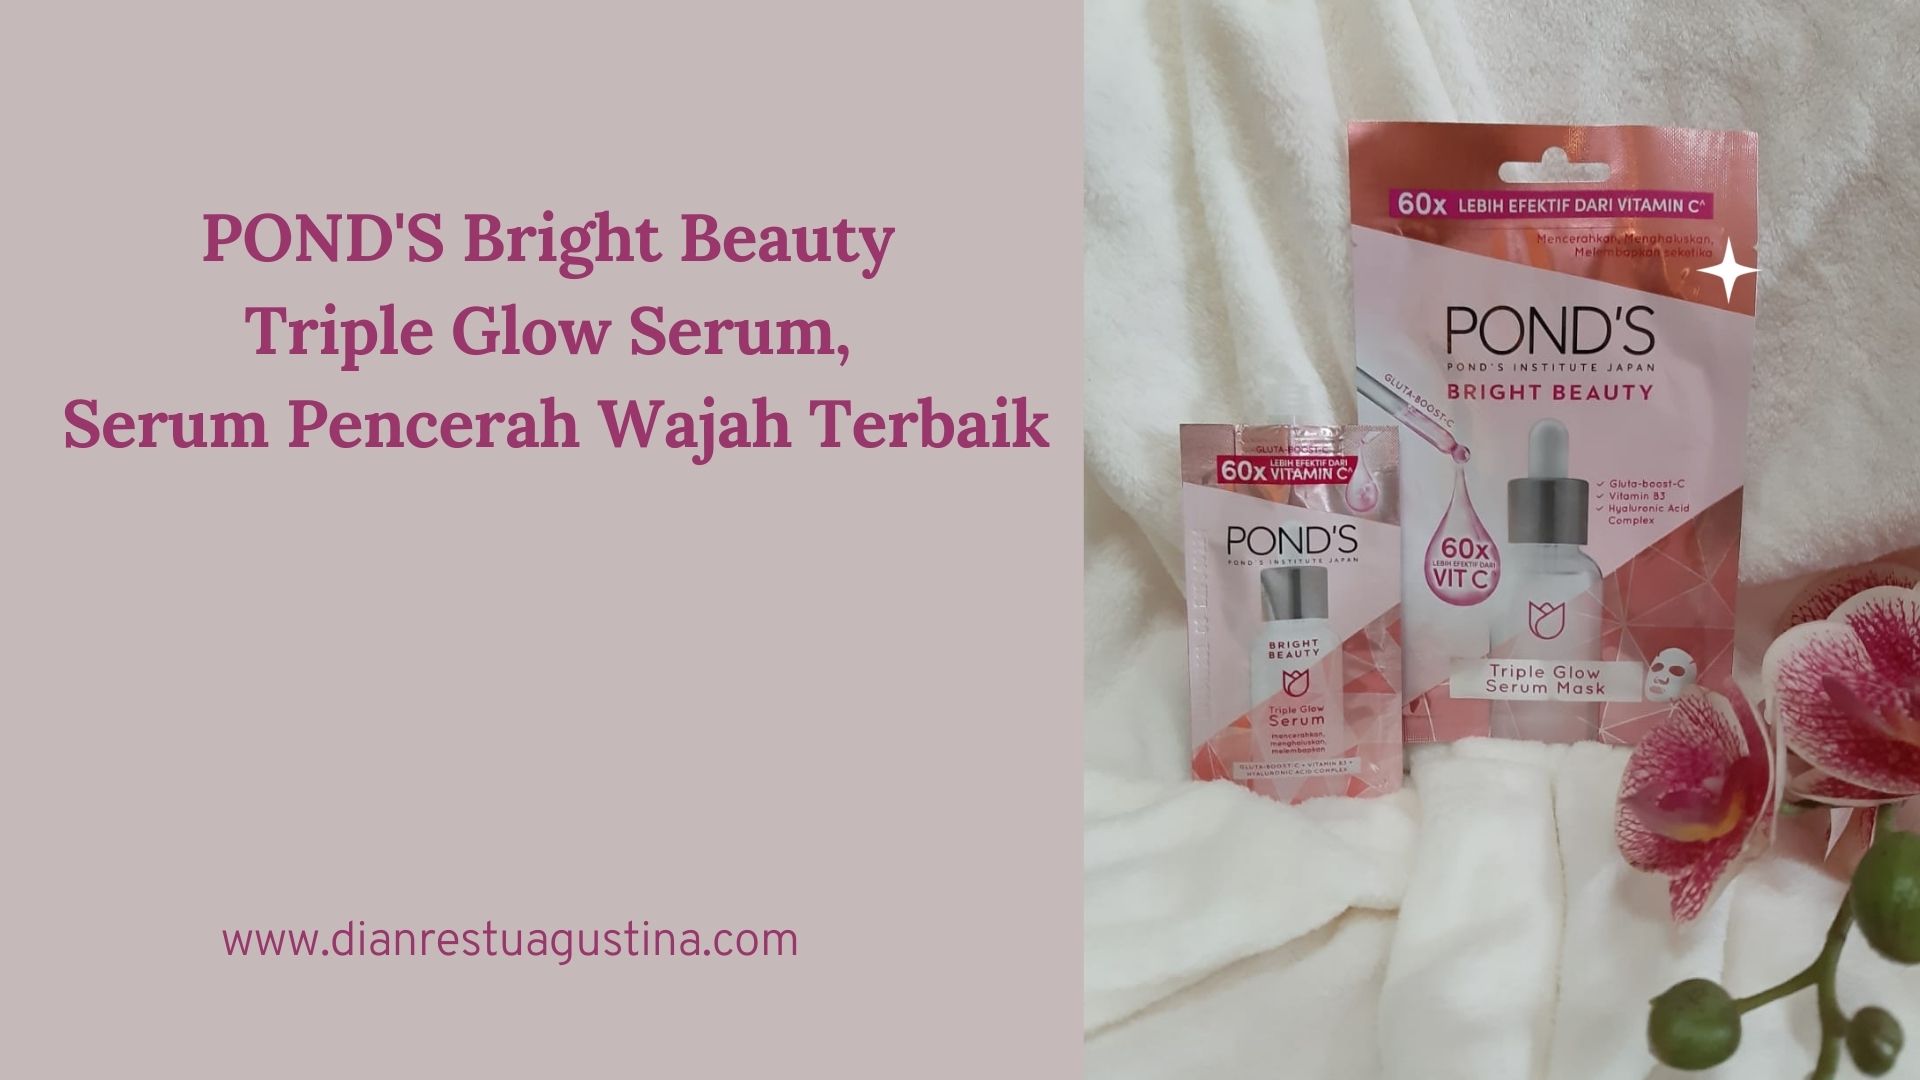 POND'S Bright Beauty Triple Glow Serum, Serum Pencerah Wajah Terbaik